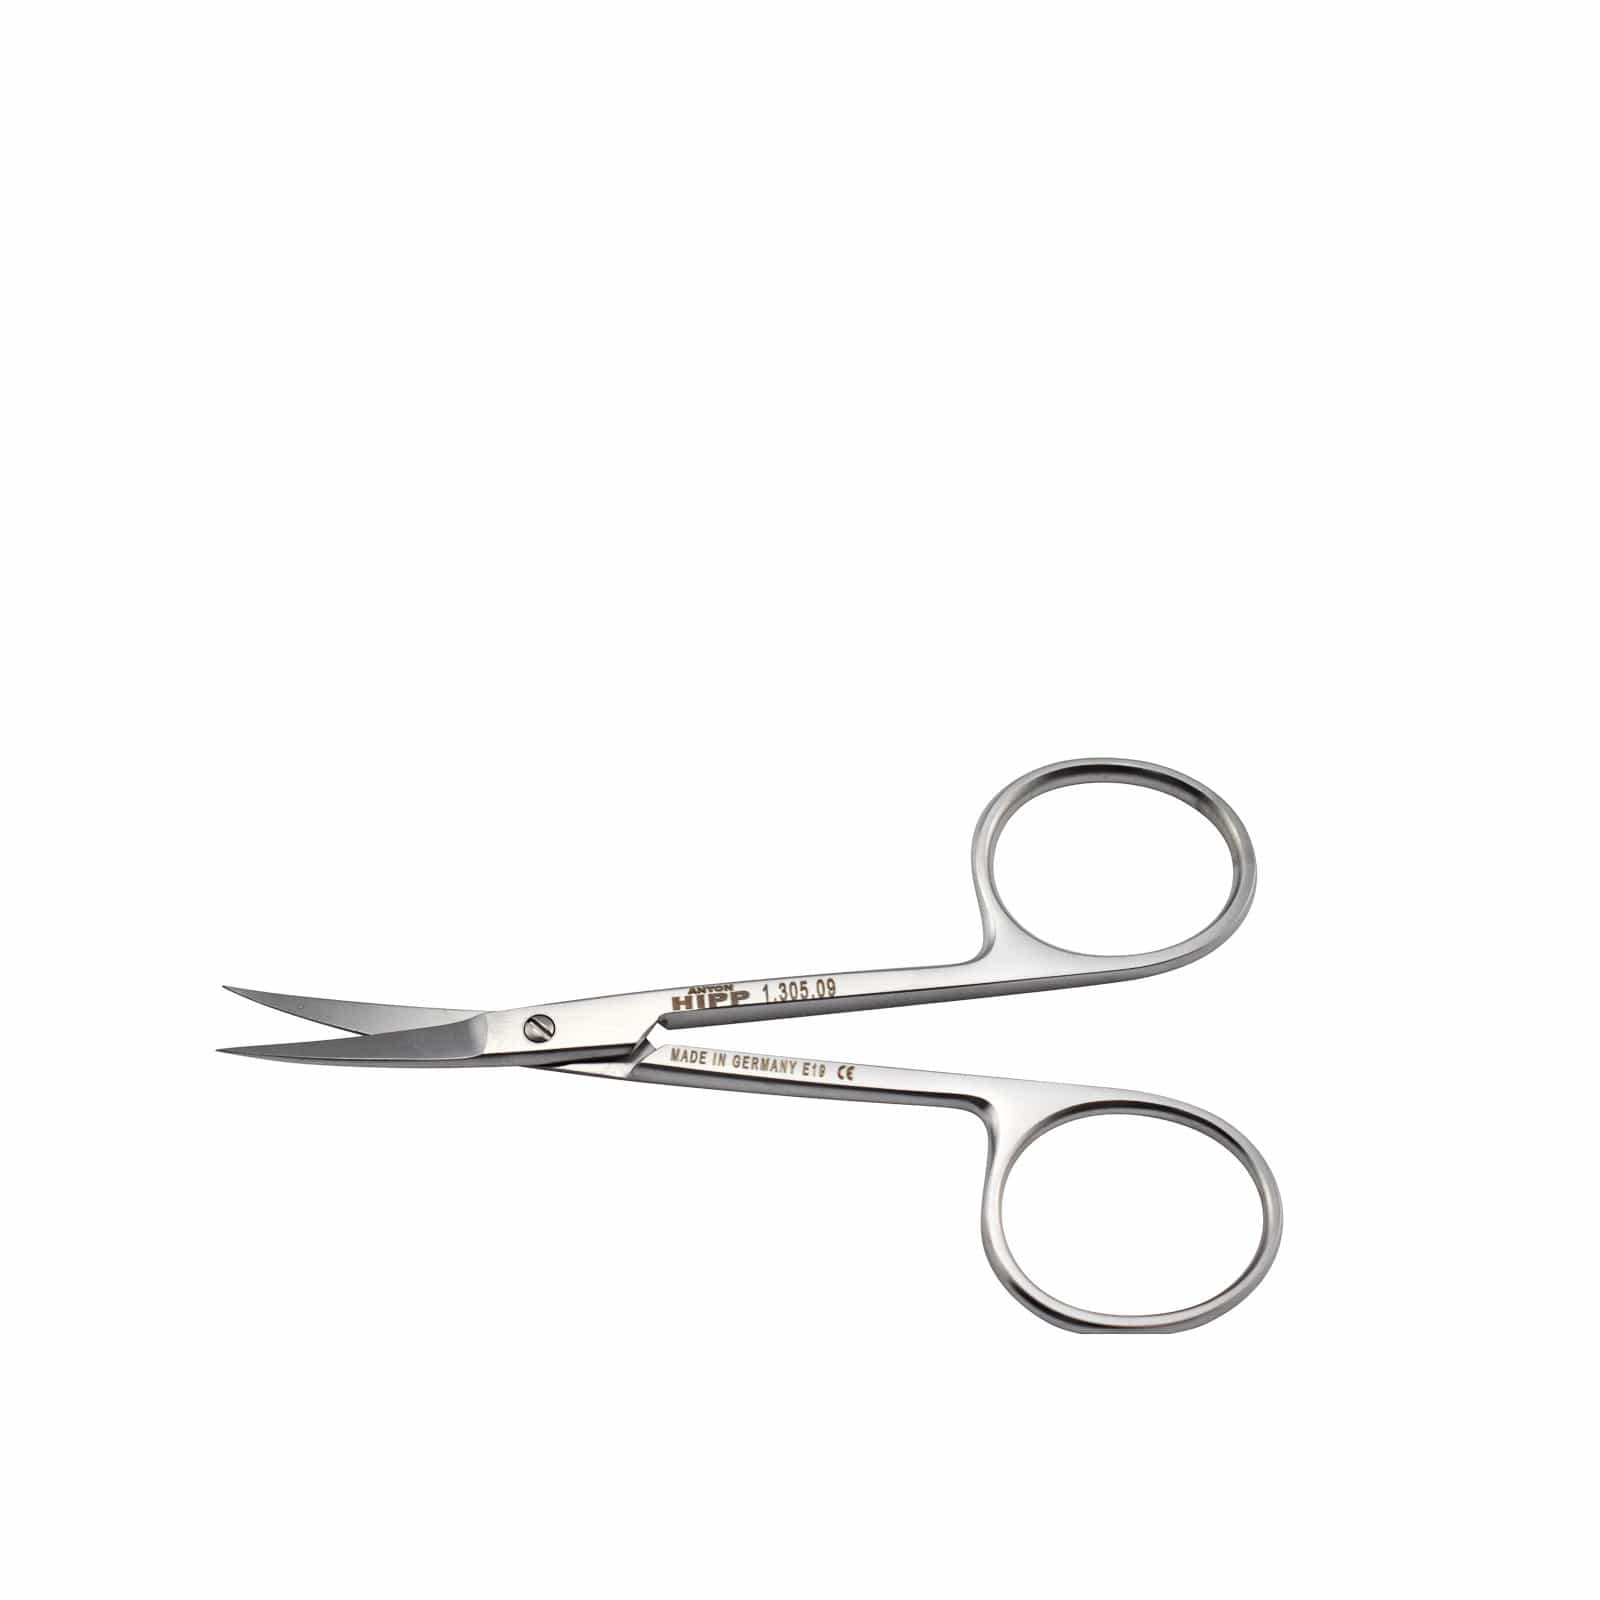 Hipp Surgical Instruments 9cm / Curved / Delicate Hipp Iris Scissors